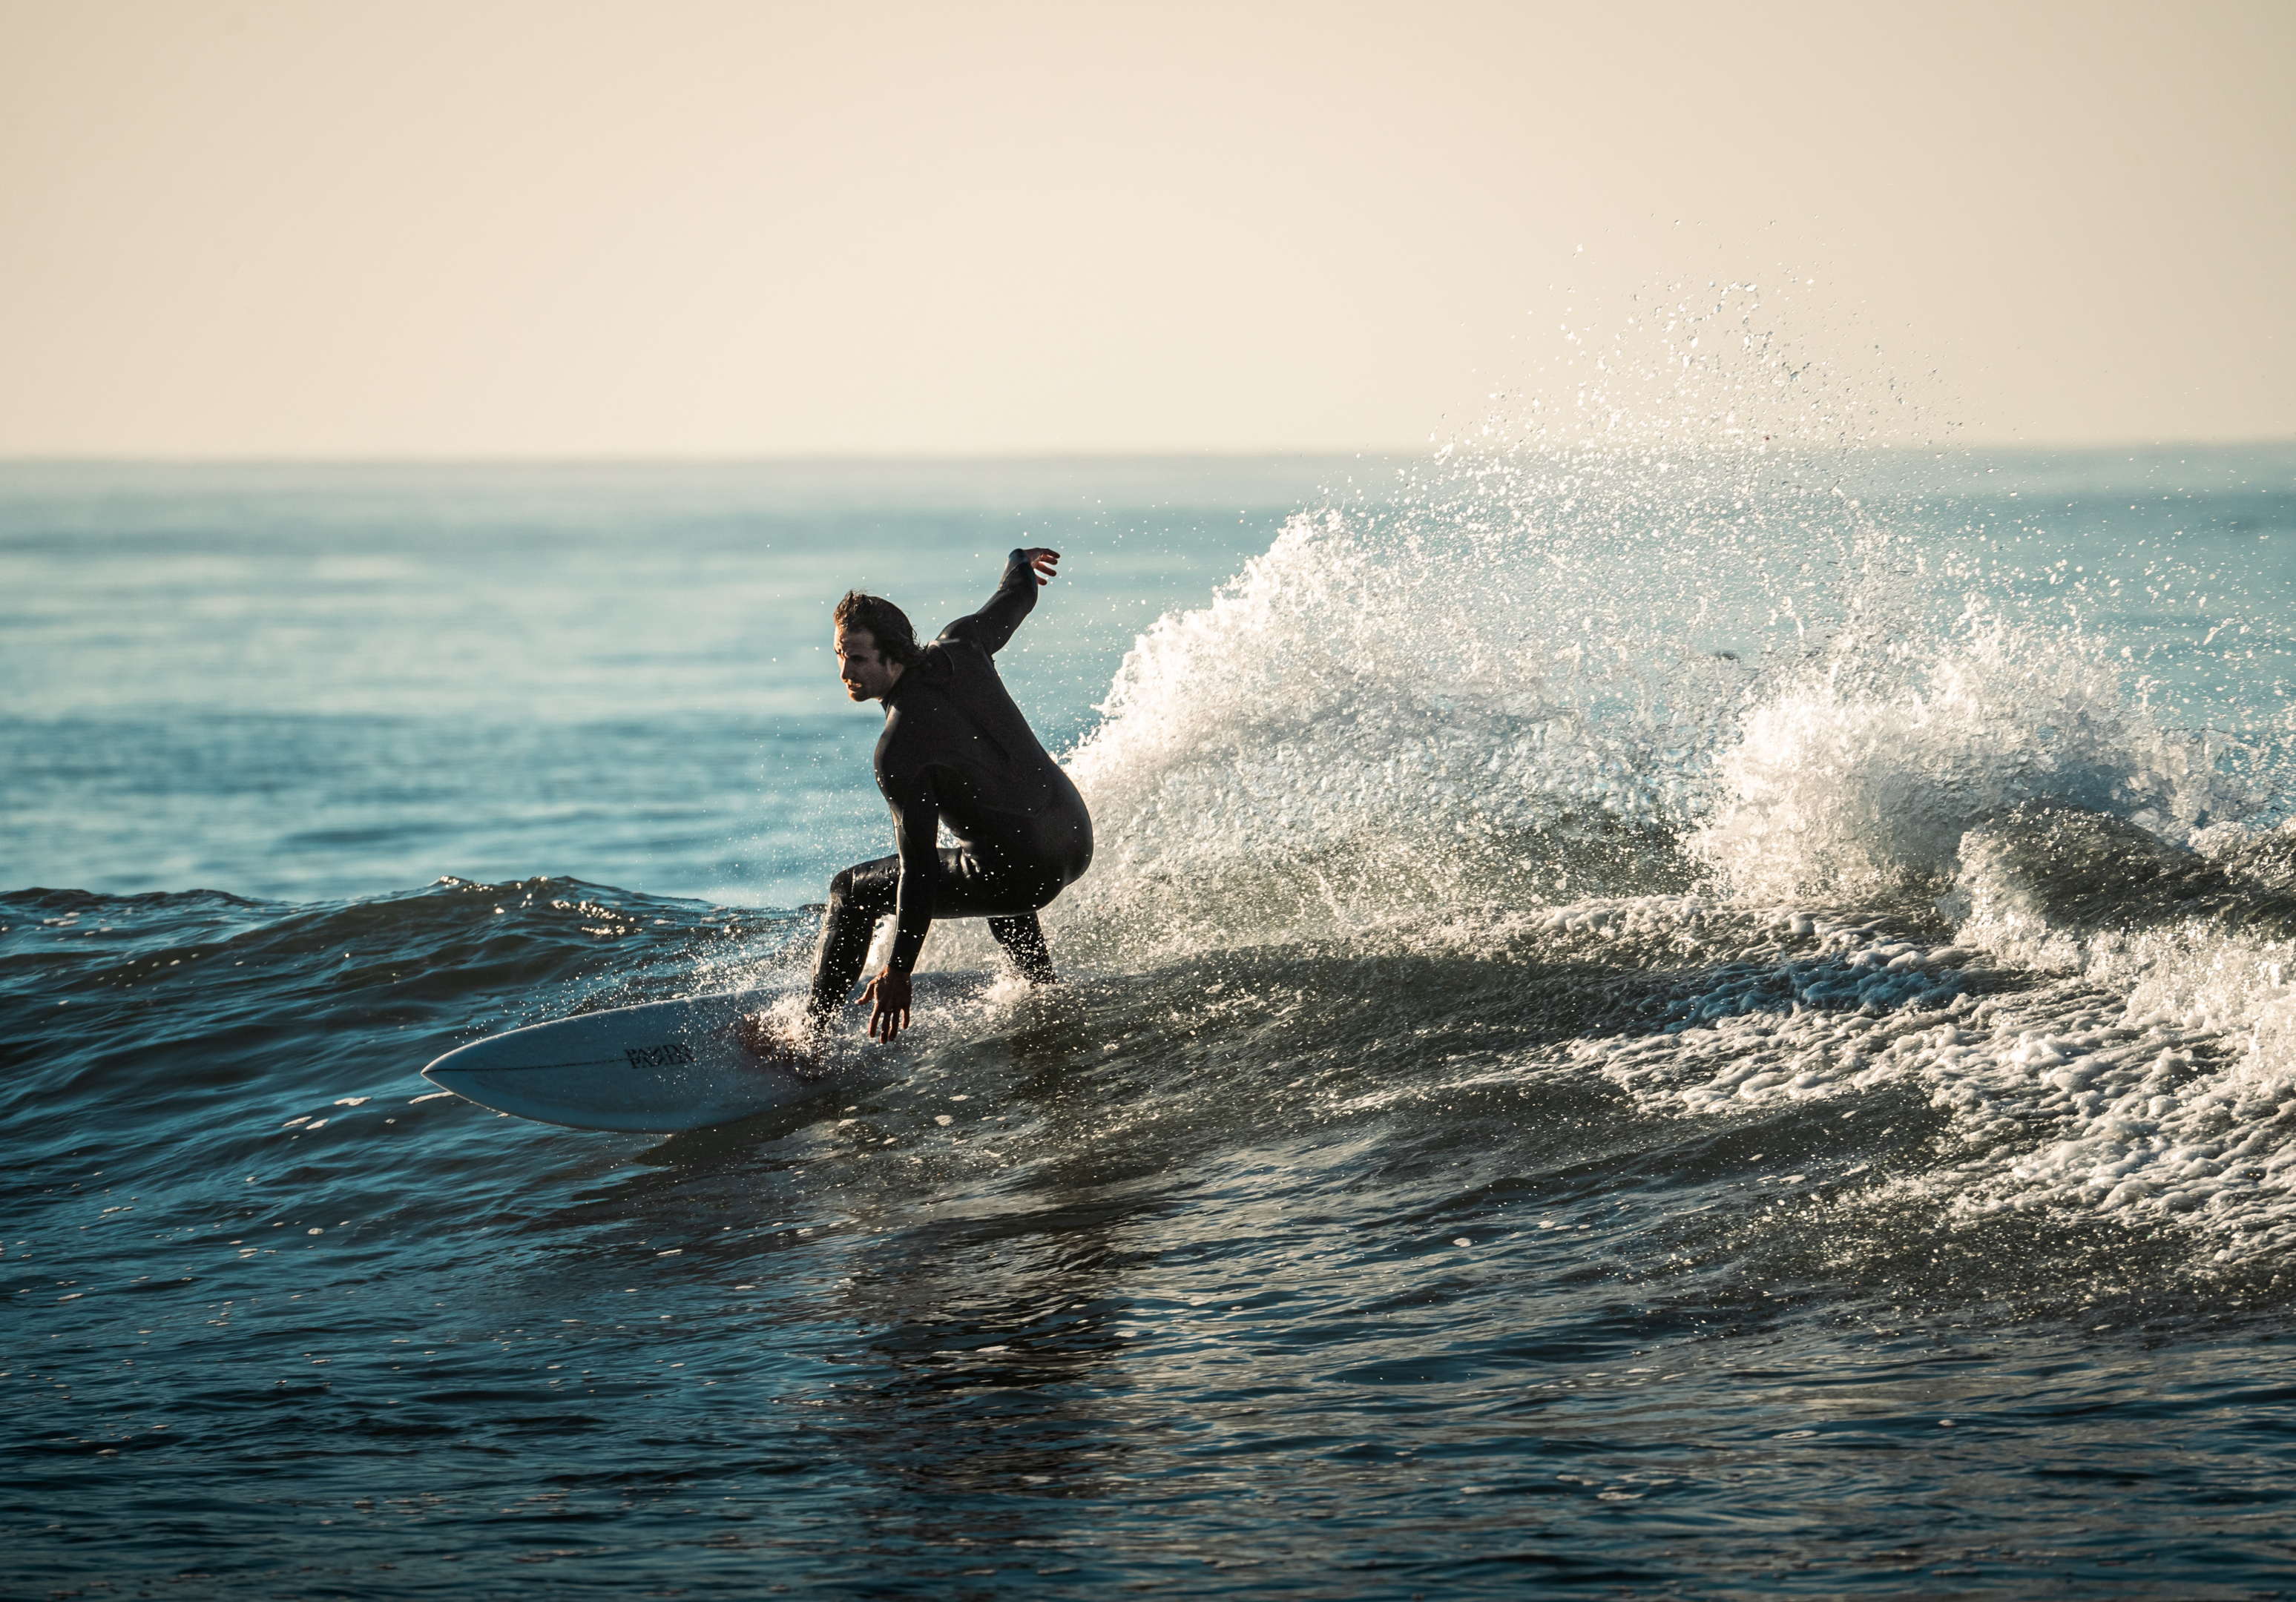 Surfing in Santa Monica, Los Angeles, CA. Photo by Venti Views